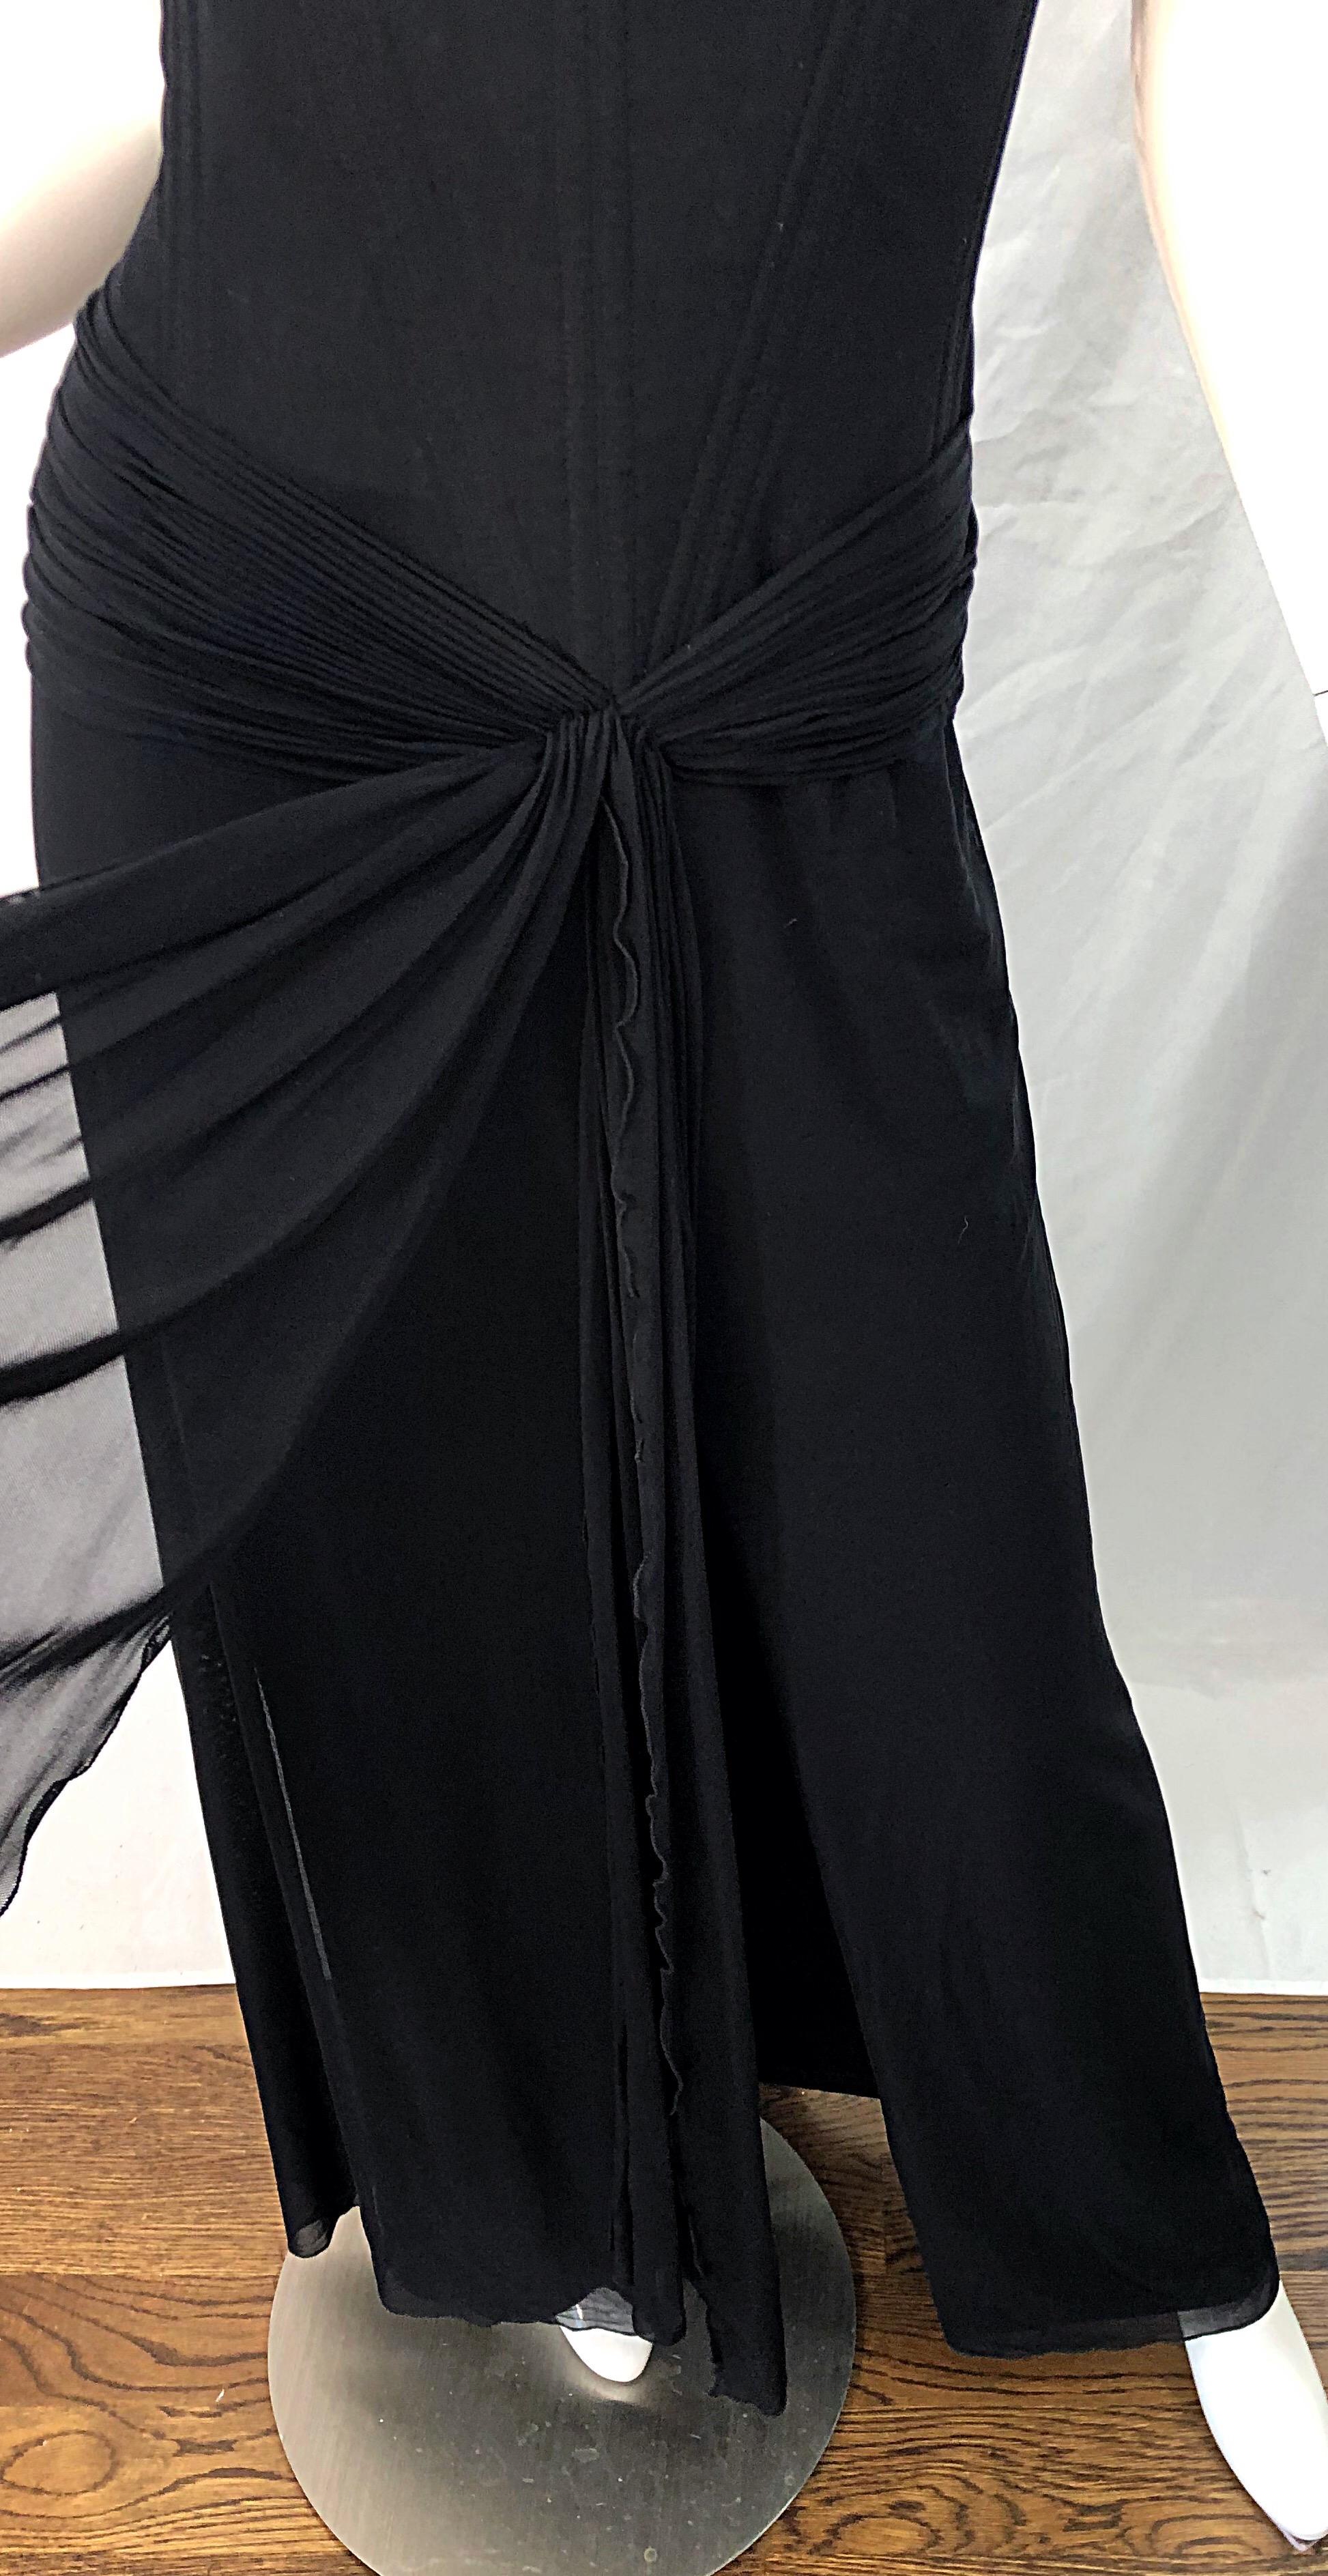 Women's Julia Roberts Pretty Woman Vintage Vicky Tiel Couture Sz 12 Black 1980s Gown